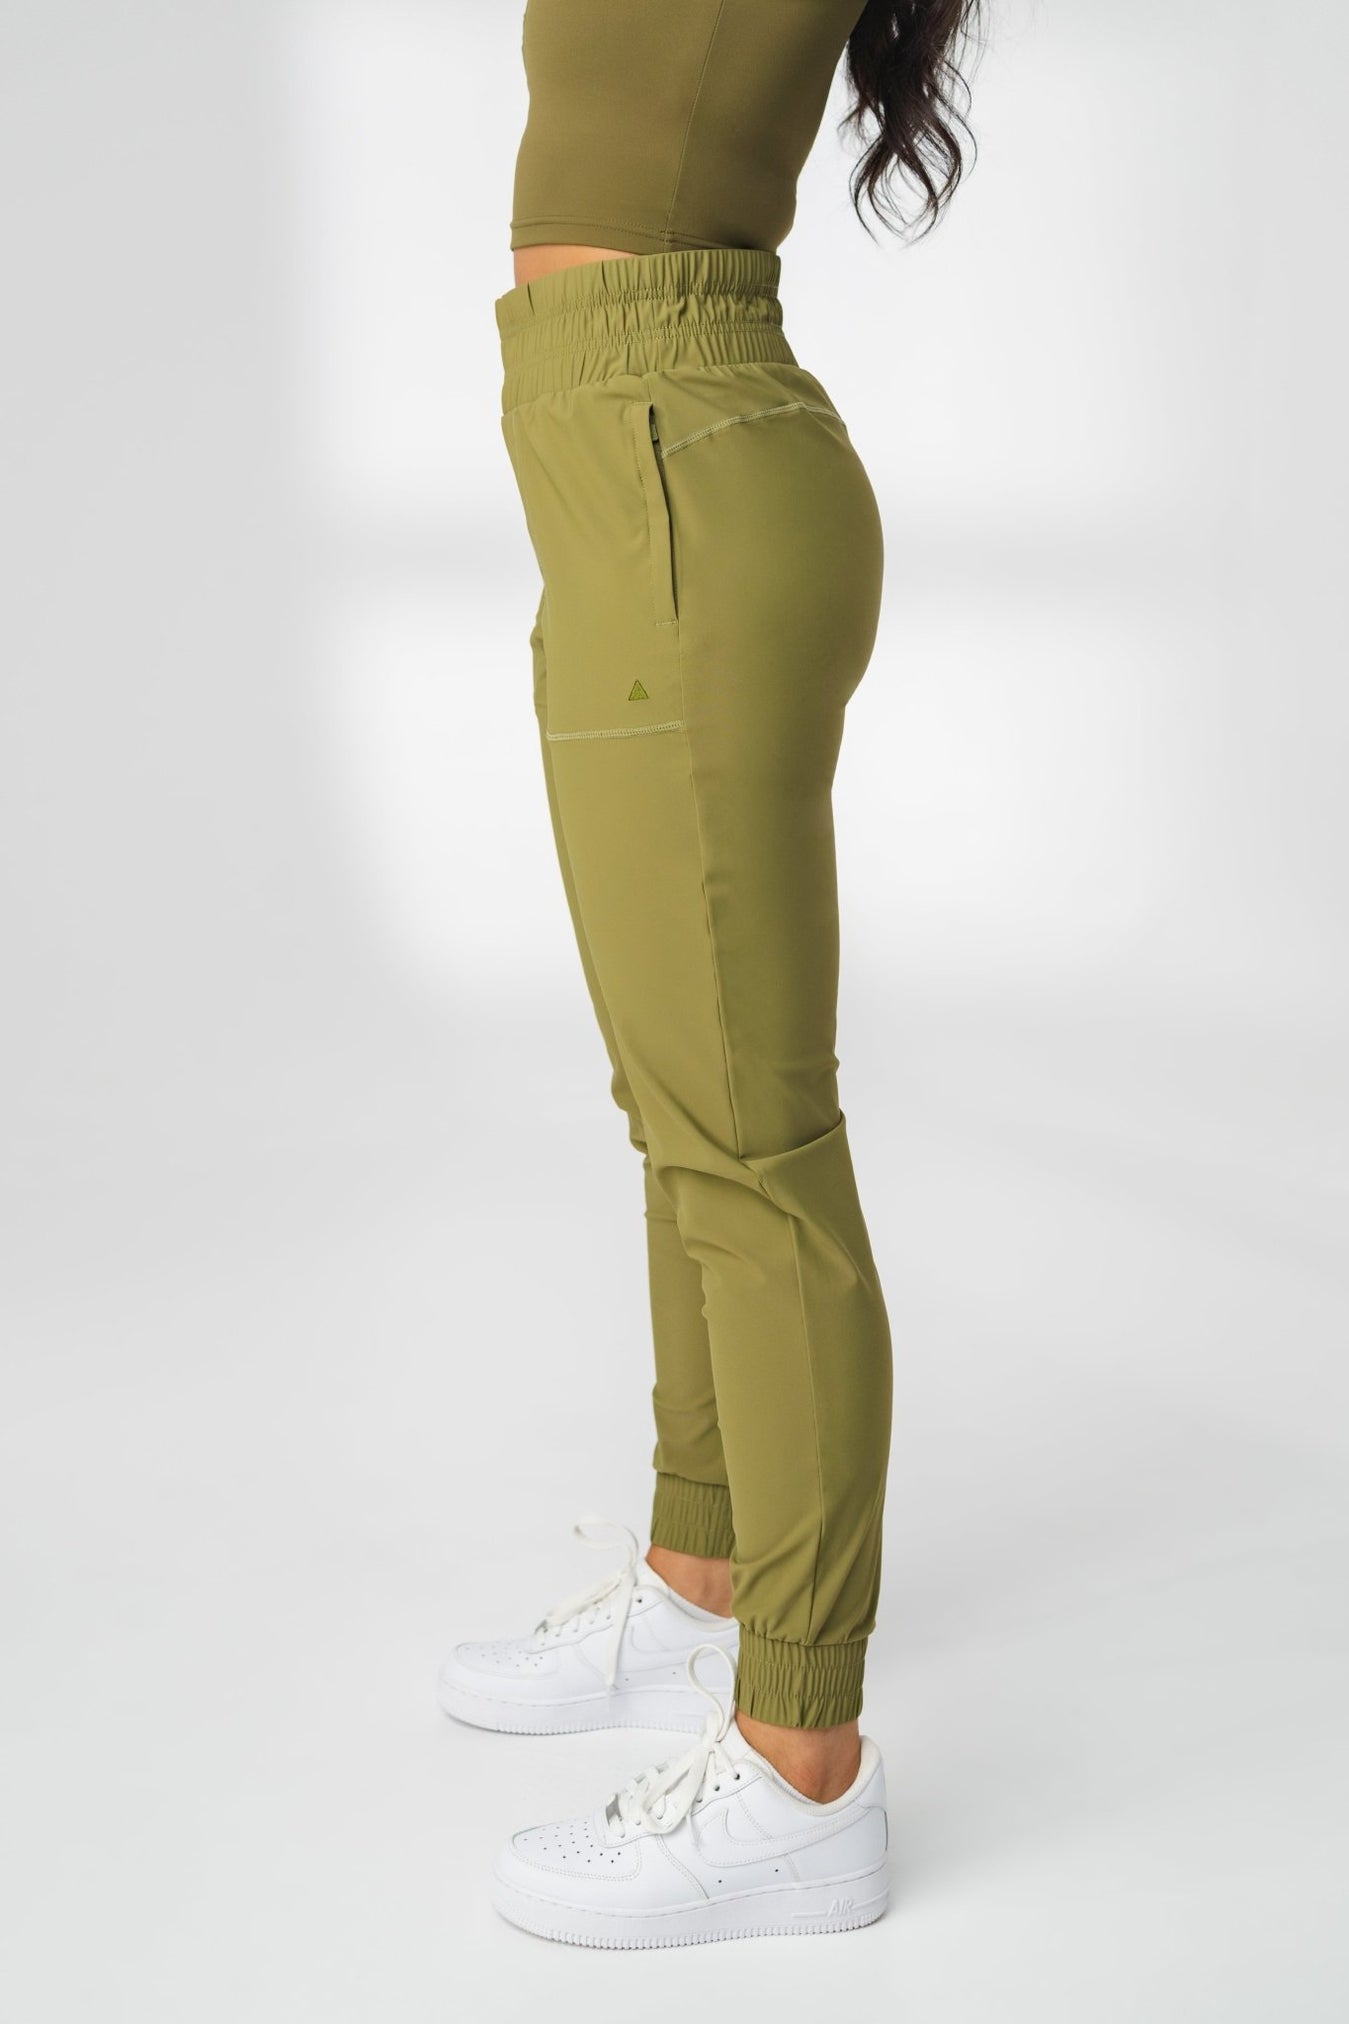 Super Soft Jogger - Trek Green, Women's Trousers & Yoga Pants